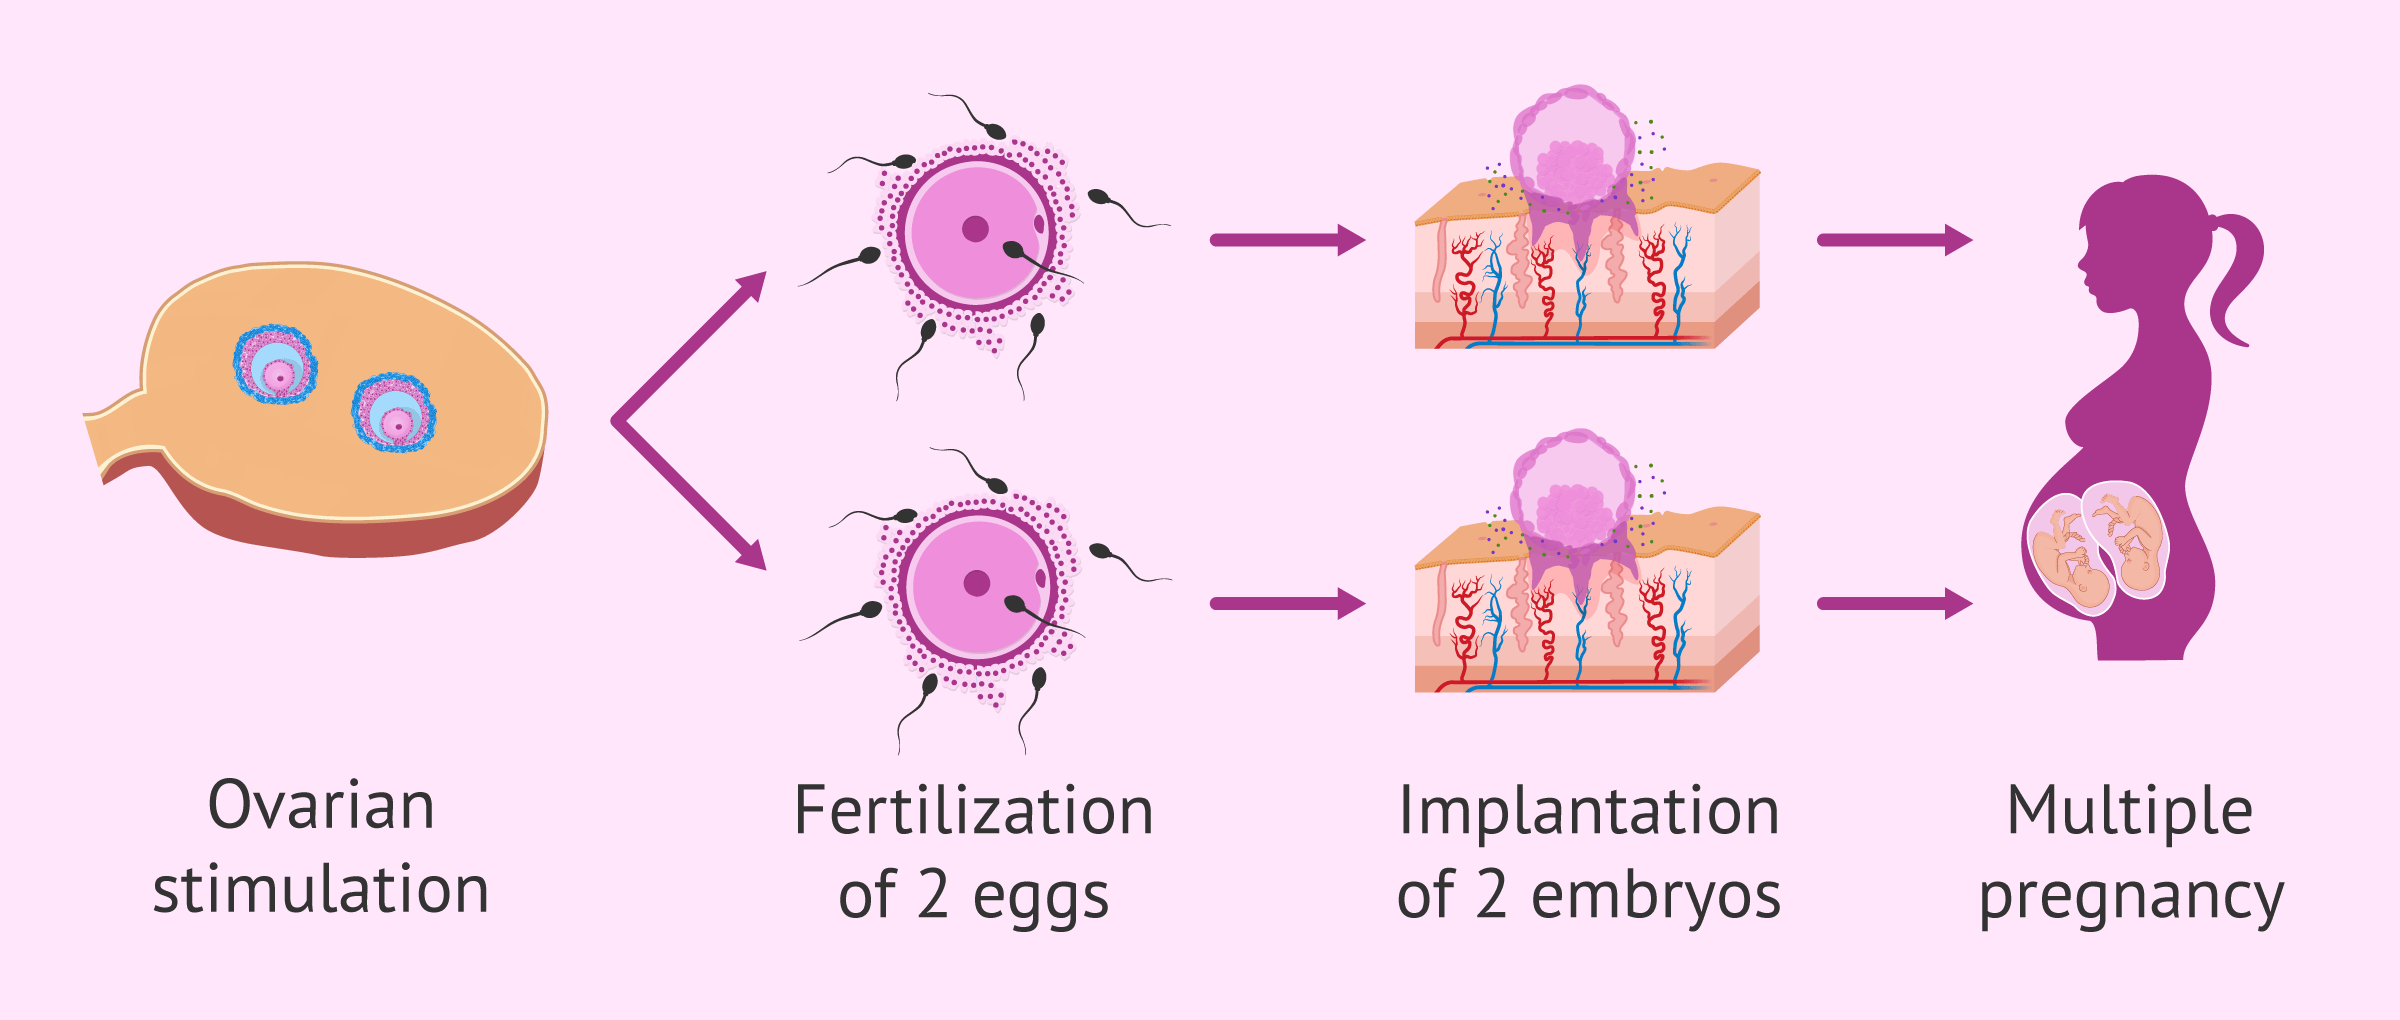 Multiple pregnancy following artificial insemination (AI)